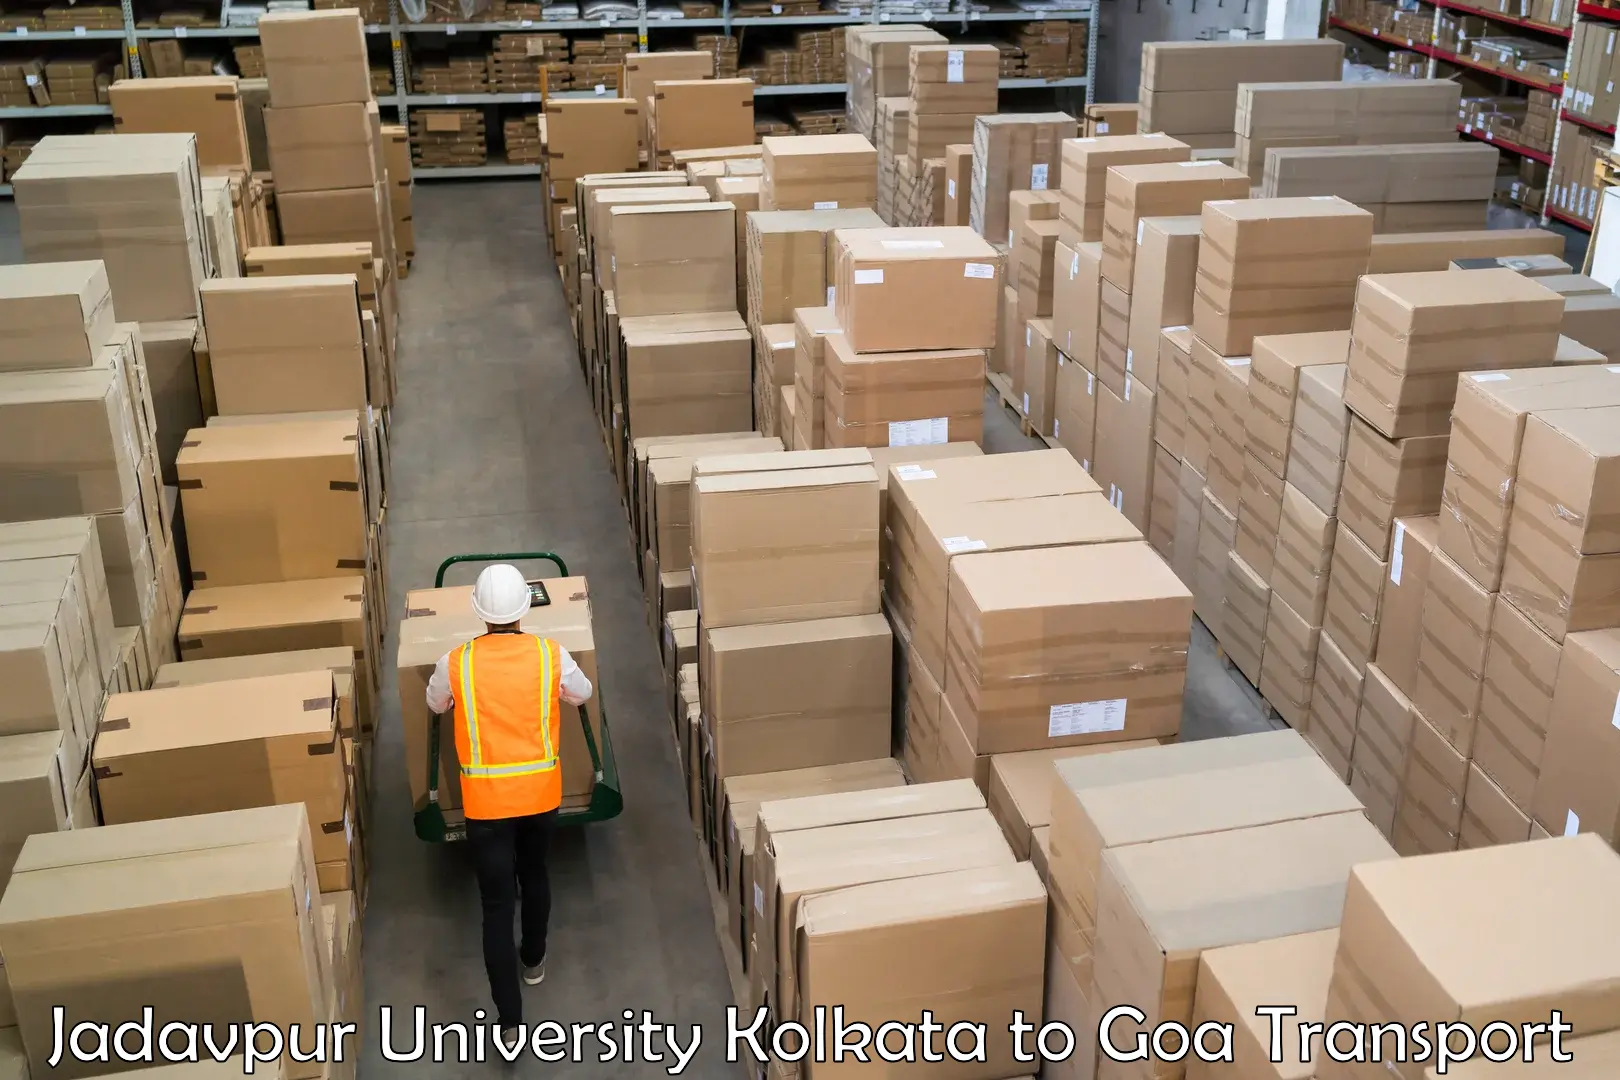 Truck transport companies in India Jadavpur University Kolkata to Bardez